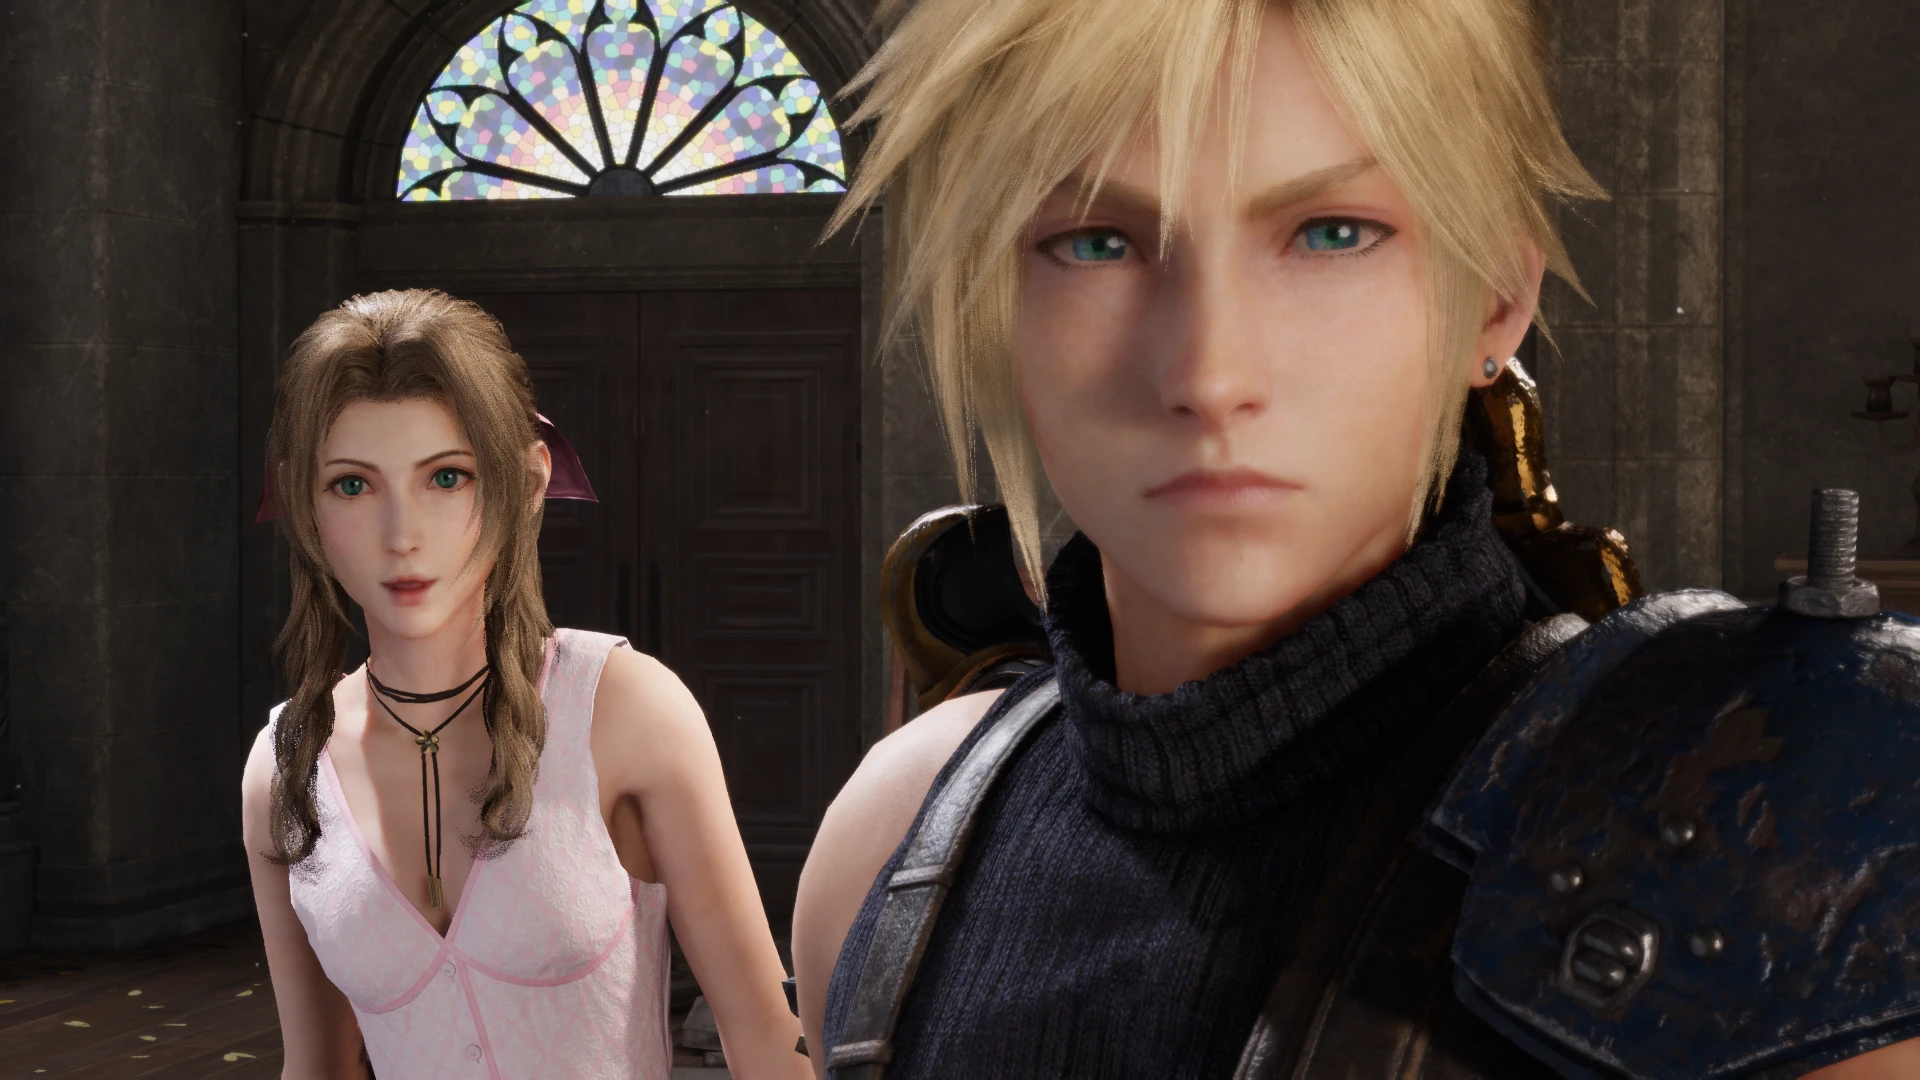 Aerith No Jacket at Final Fantasy VII Remake Nexus - Mods and community